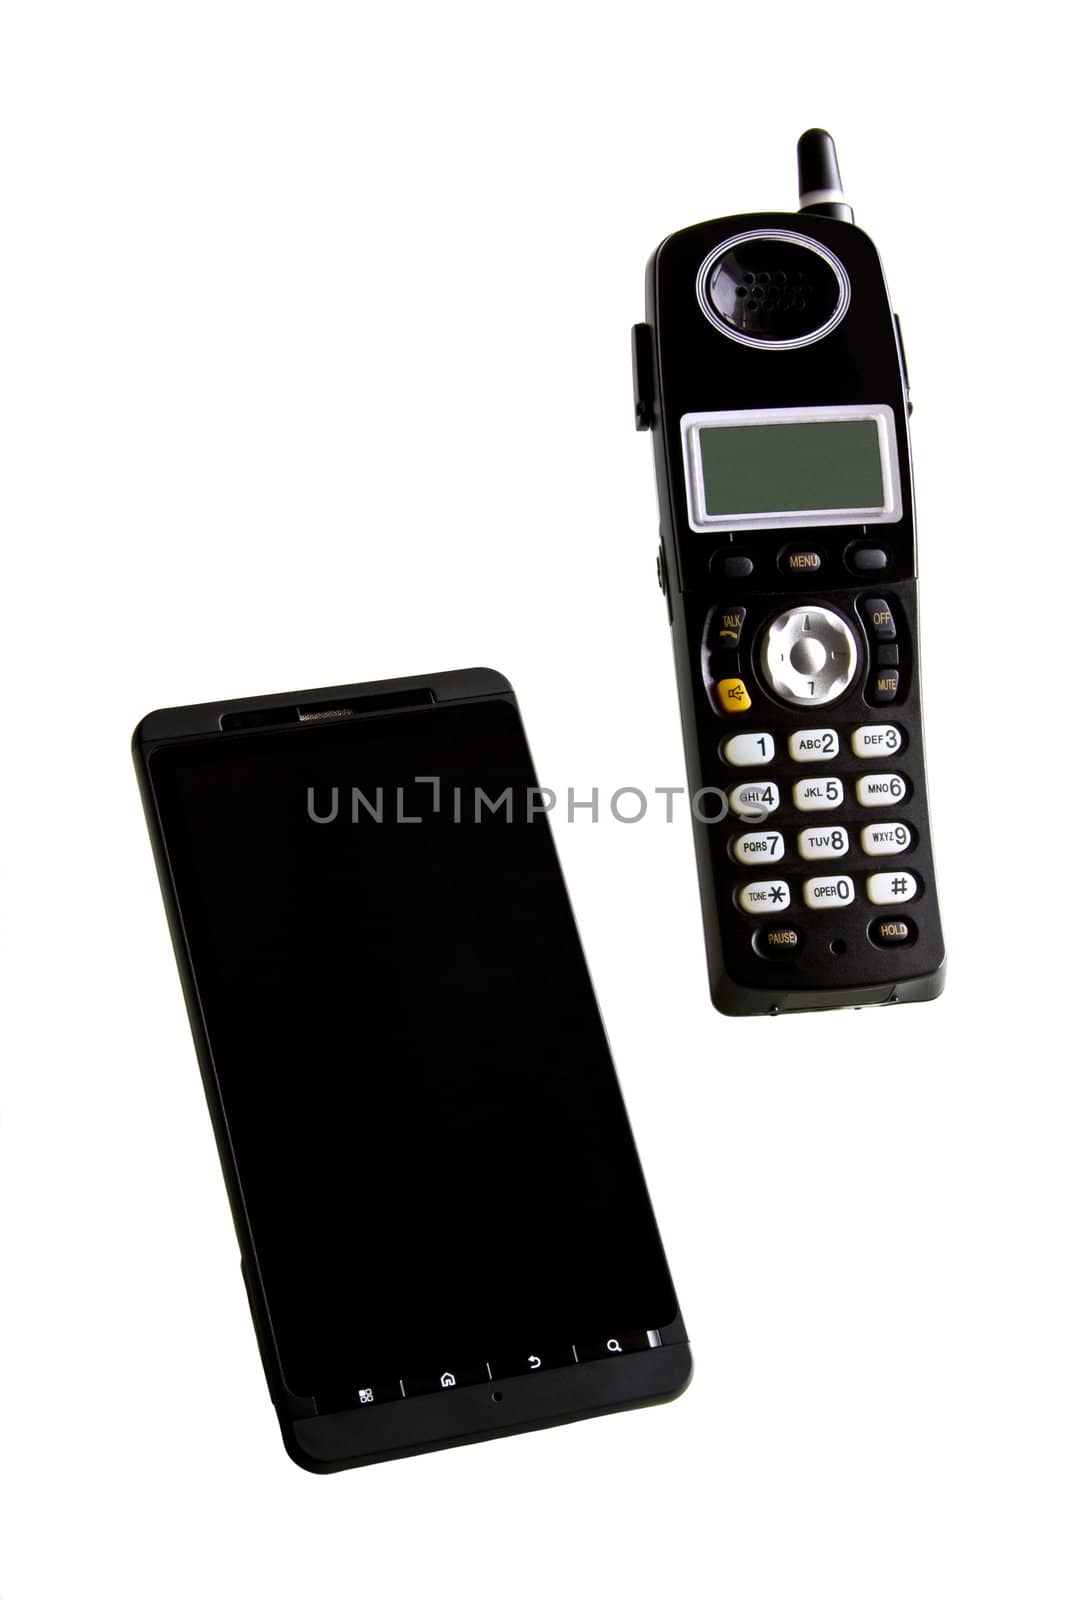 Smarthphone and Portable Phone by wulloa